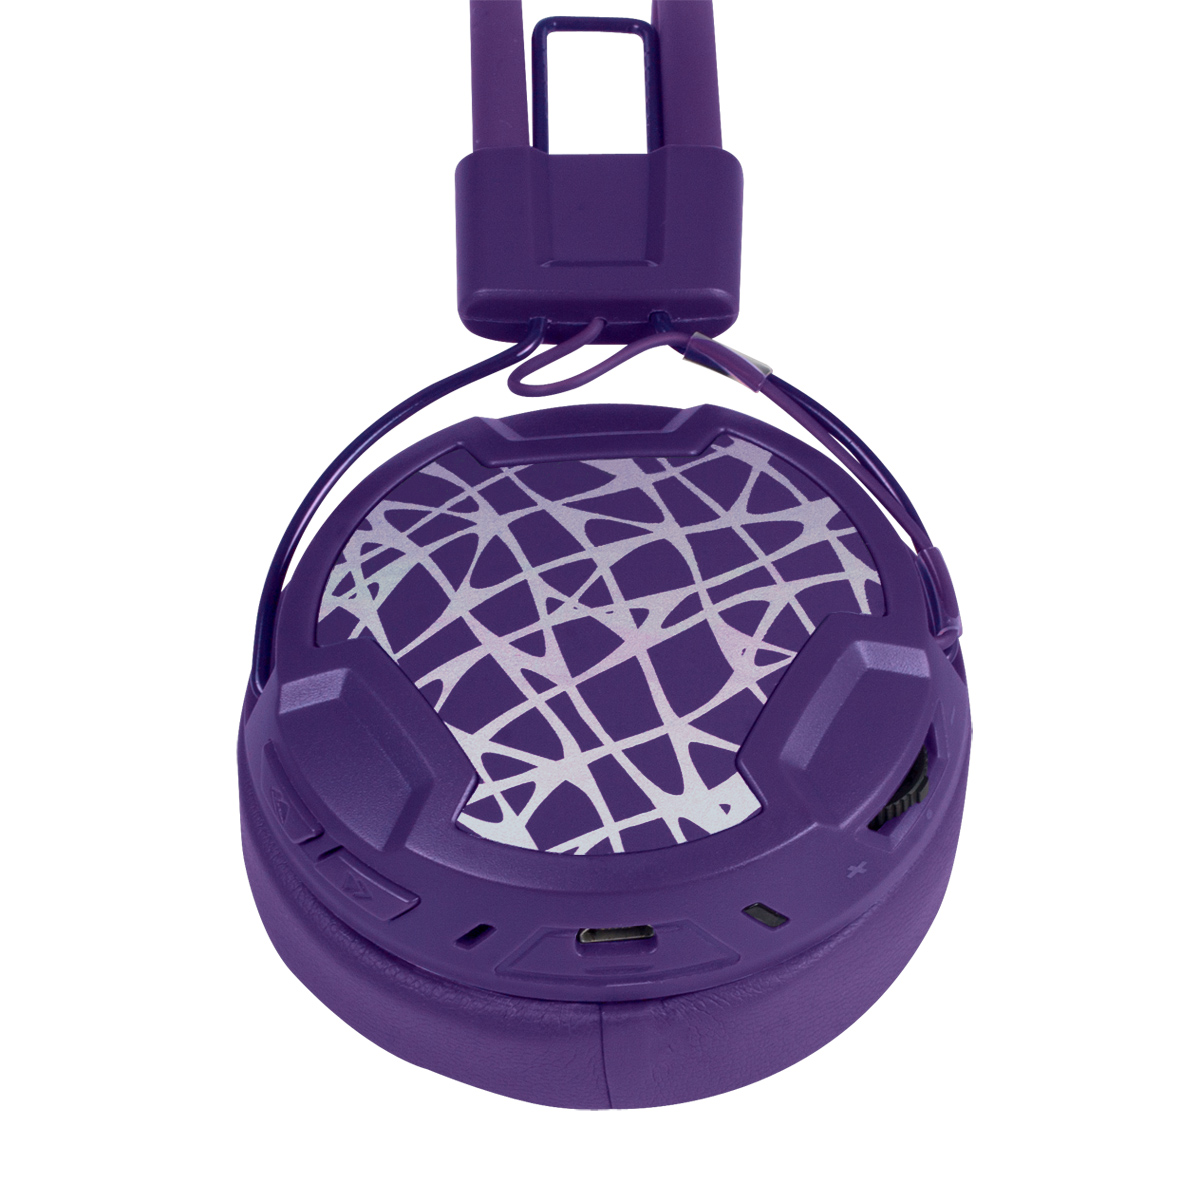 P604_Wireless_Purple_G06